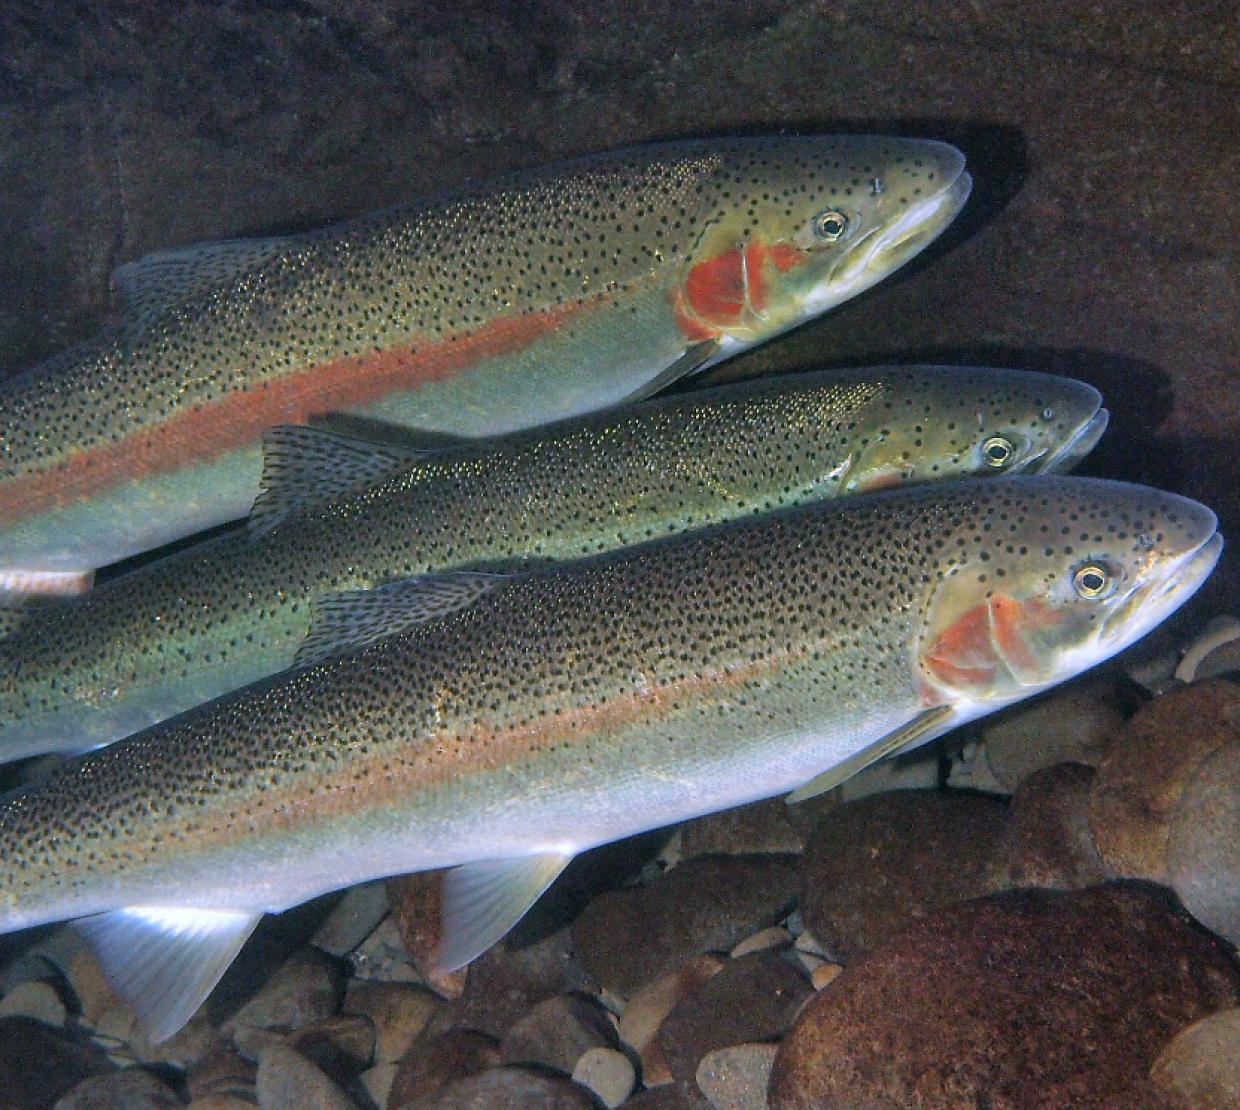 Three steelhead trout swimming among rocks